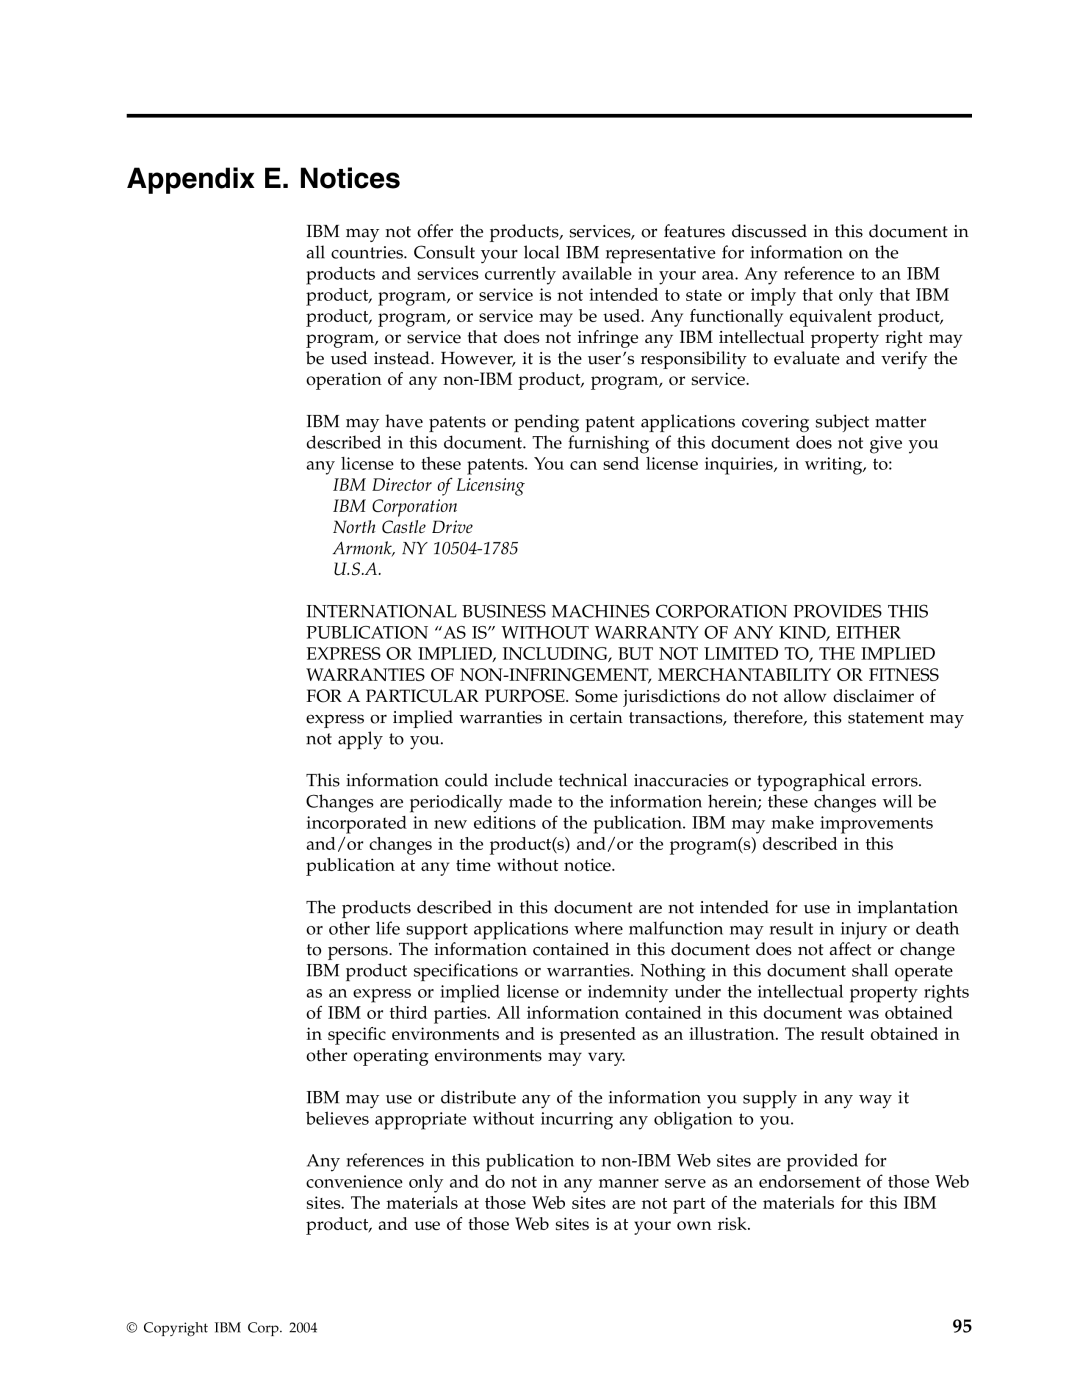 Lenovo A50 manual Appendix E. Notices, IBM Director of Licensing IBM Corporation, North Castle Drive Armonk, NY U.S.A 